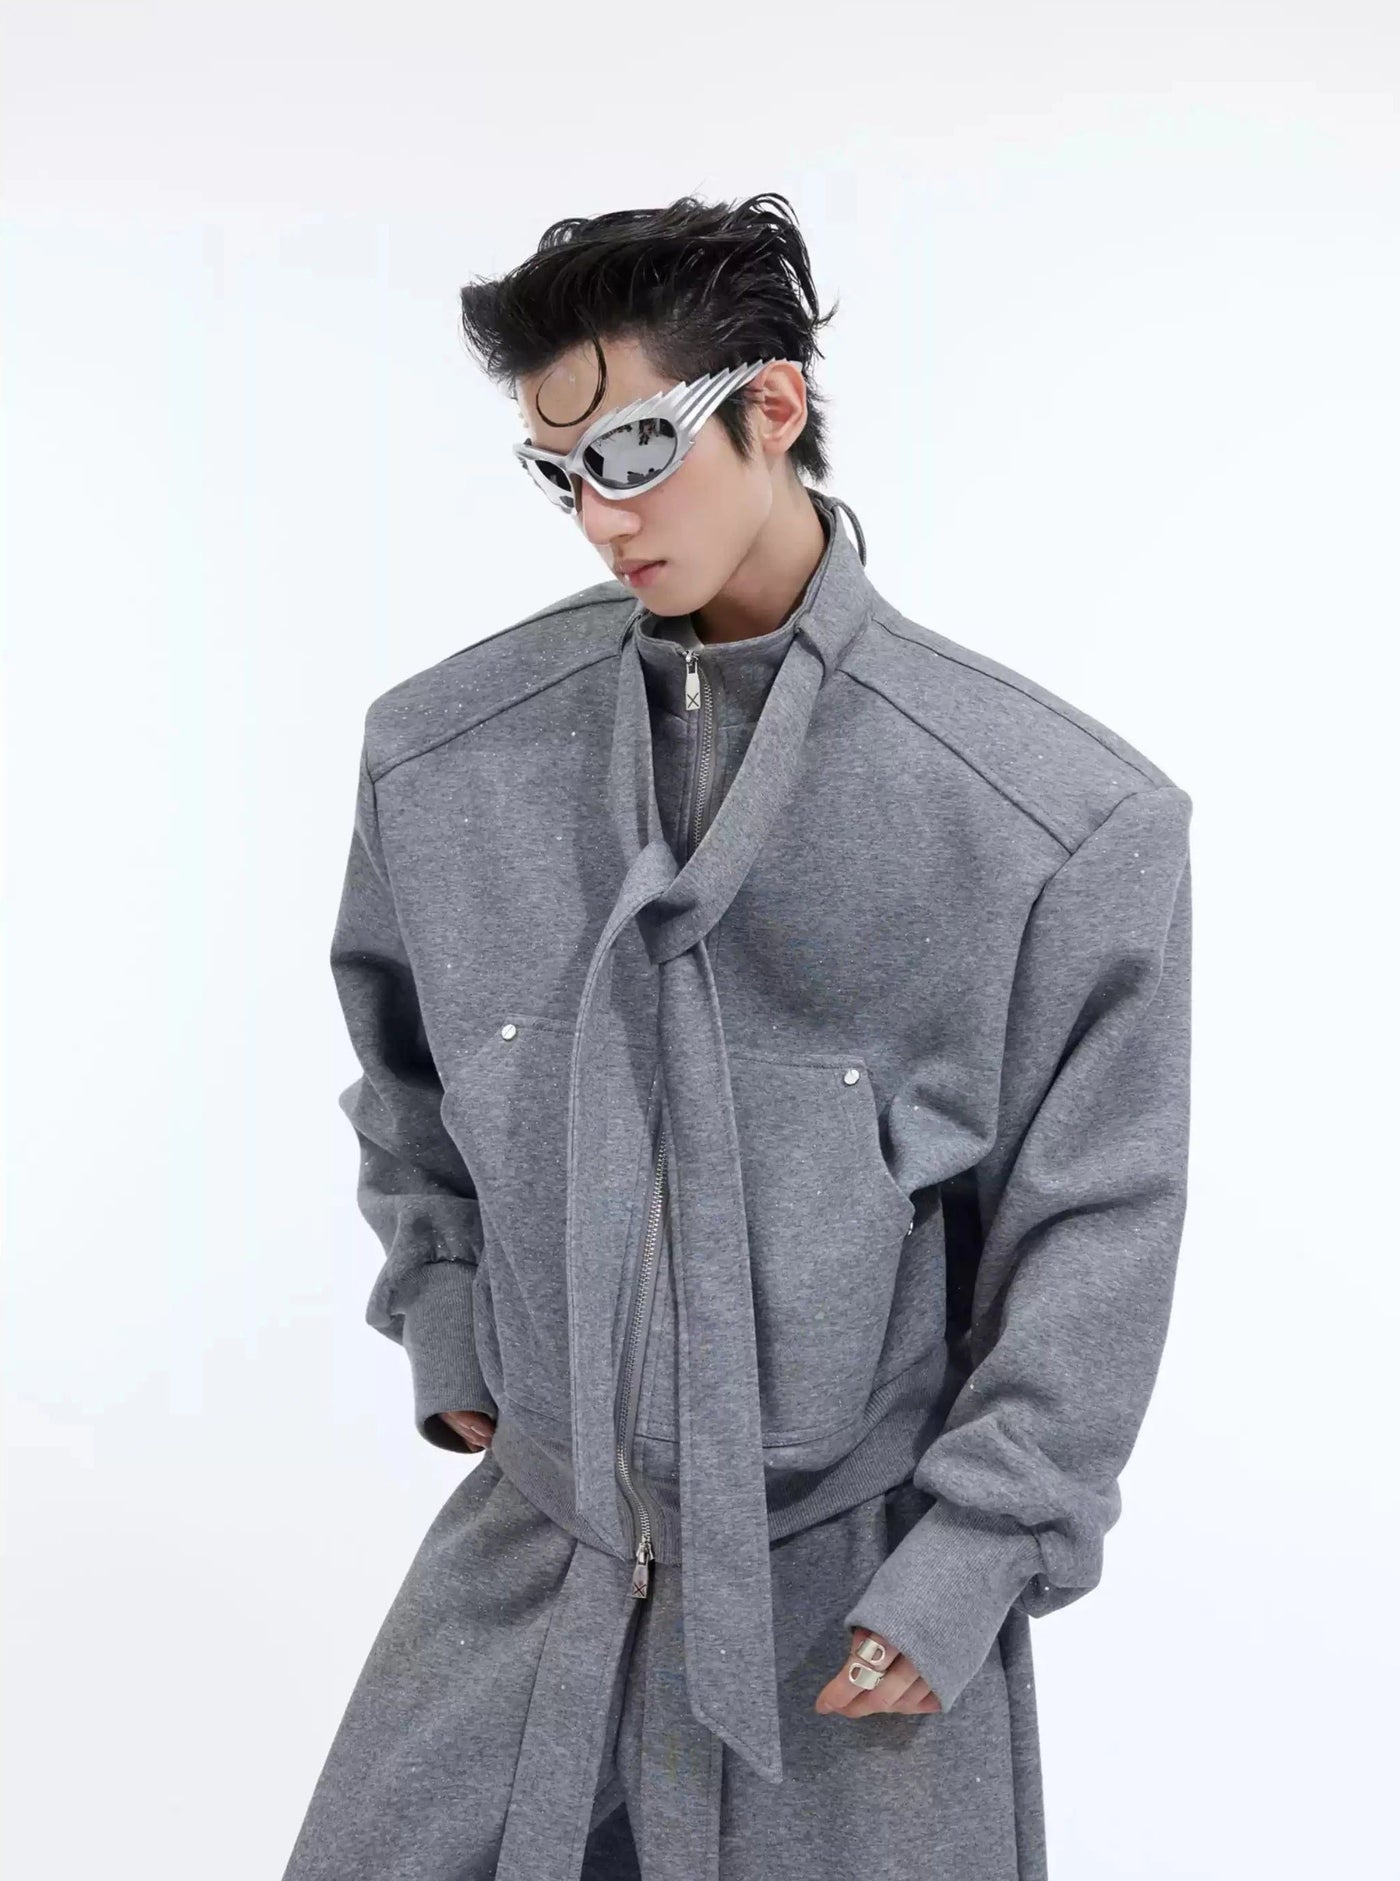 Scattered Dust Tie Jacket & Sweatpants Set Korean Street Fashion Clothing Set By Argue Culture Shop Online at OH Vault